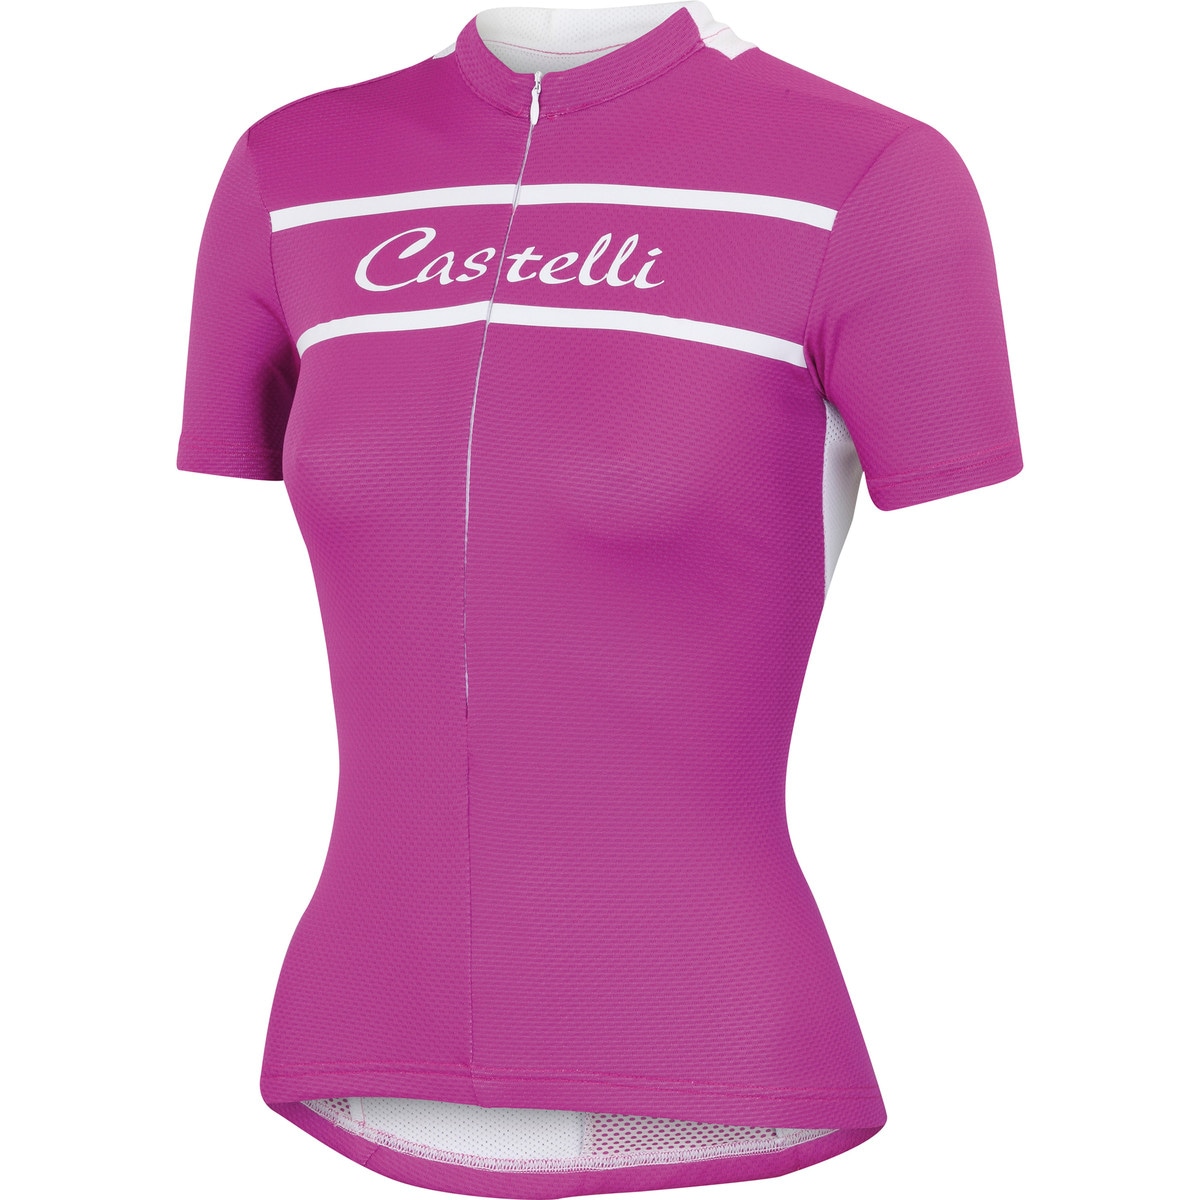 Castelli Promessa Jersey - Short Sleeve - Women's